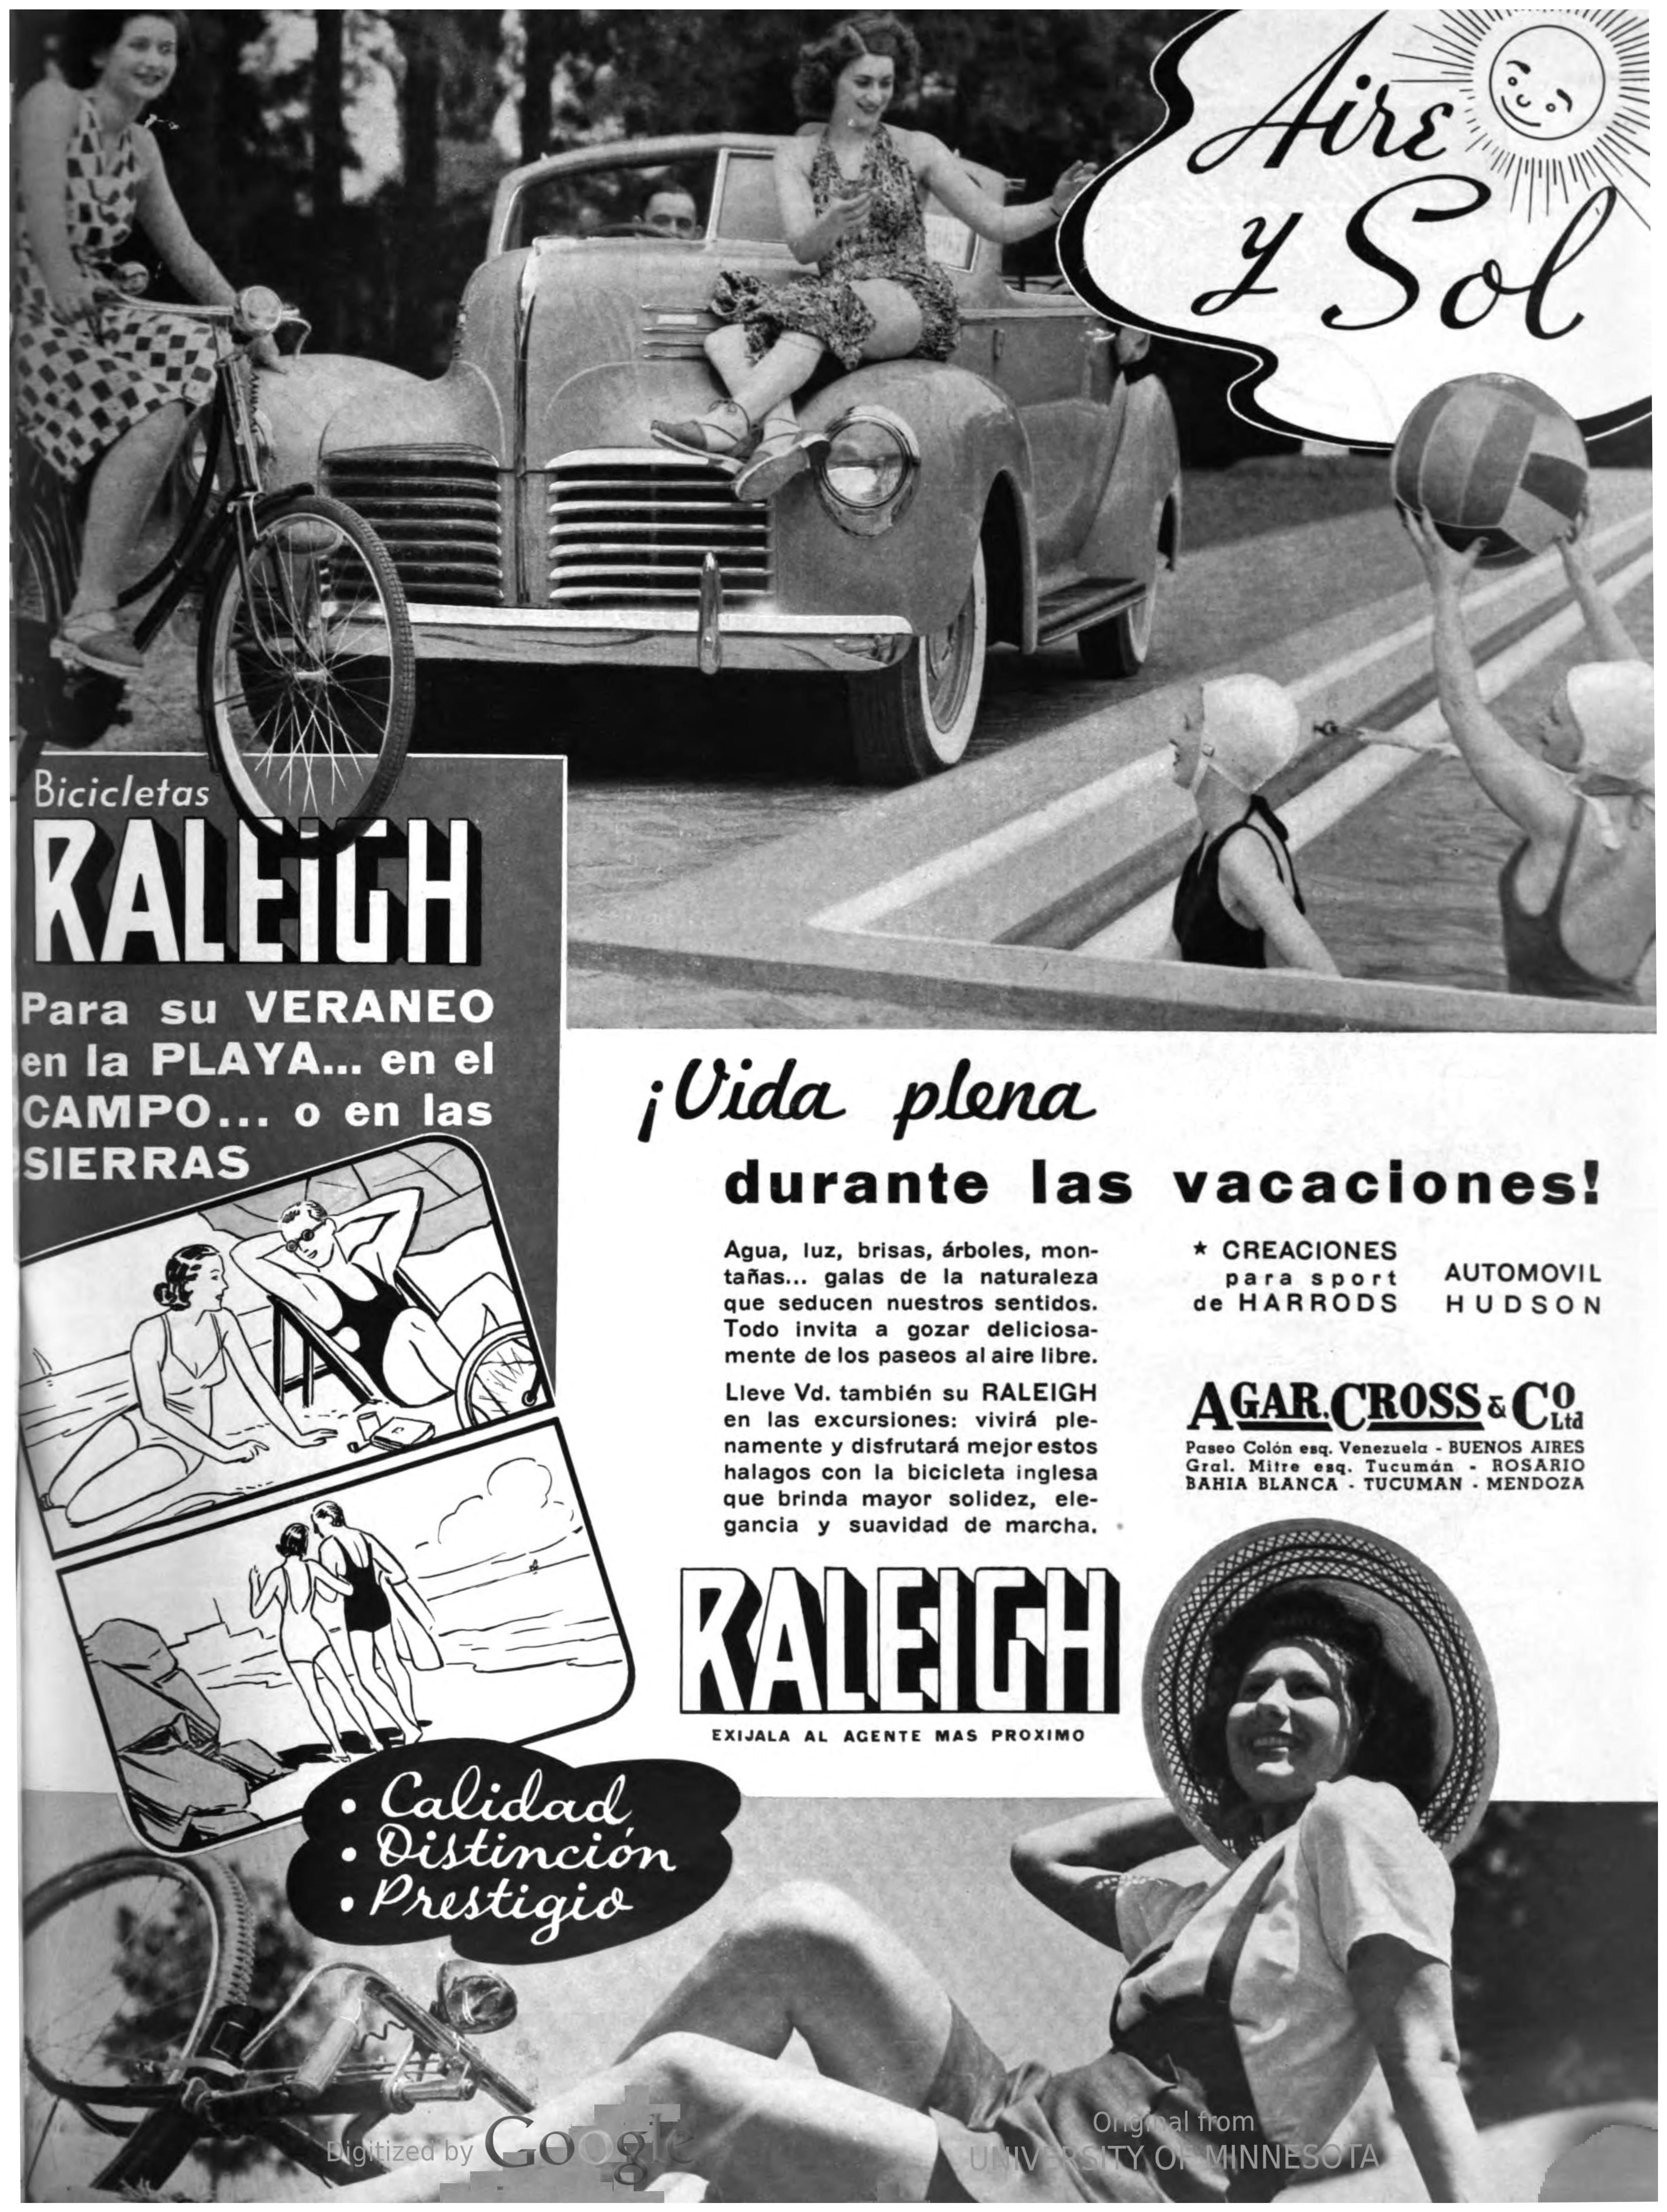 Raleigh 1940 0.jpg